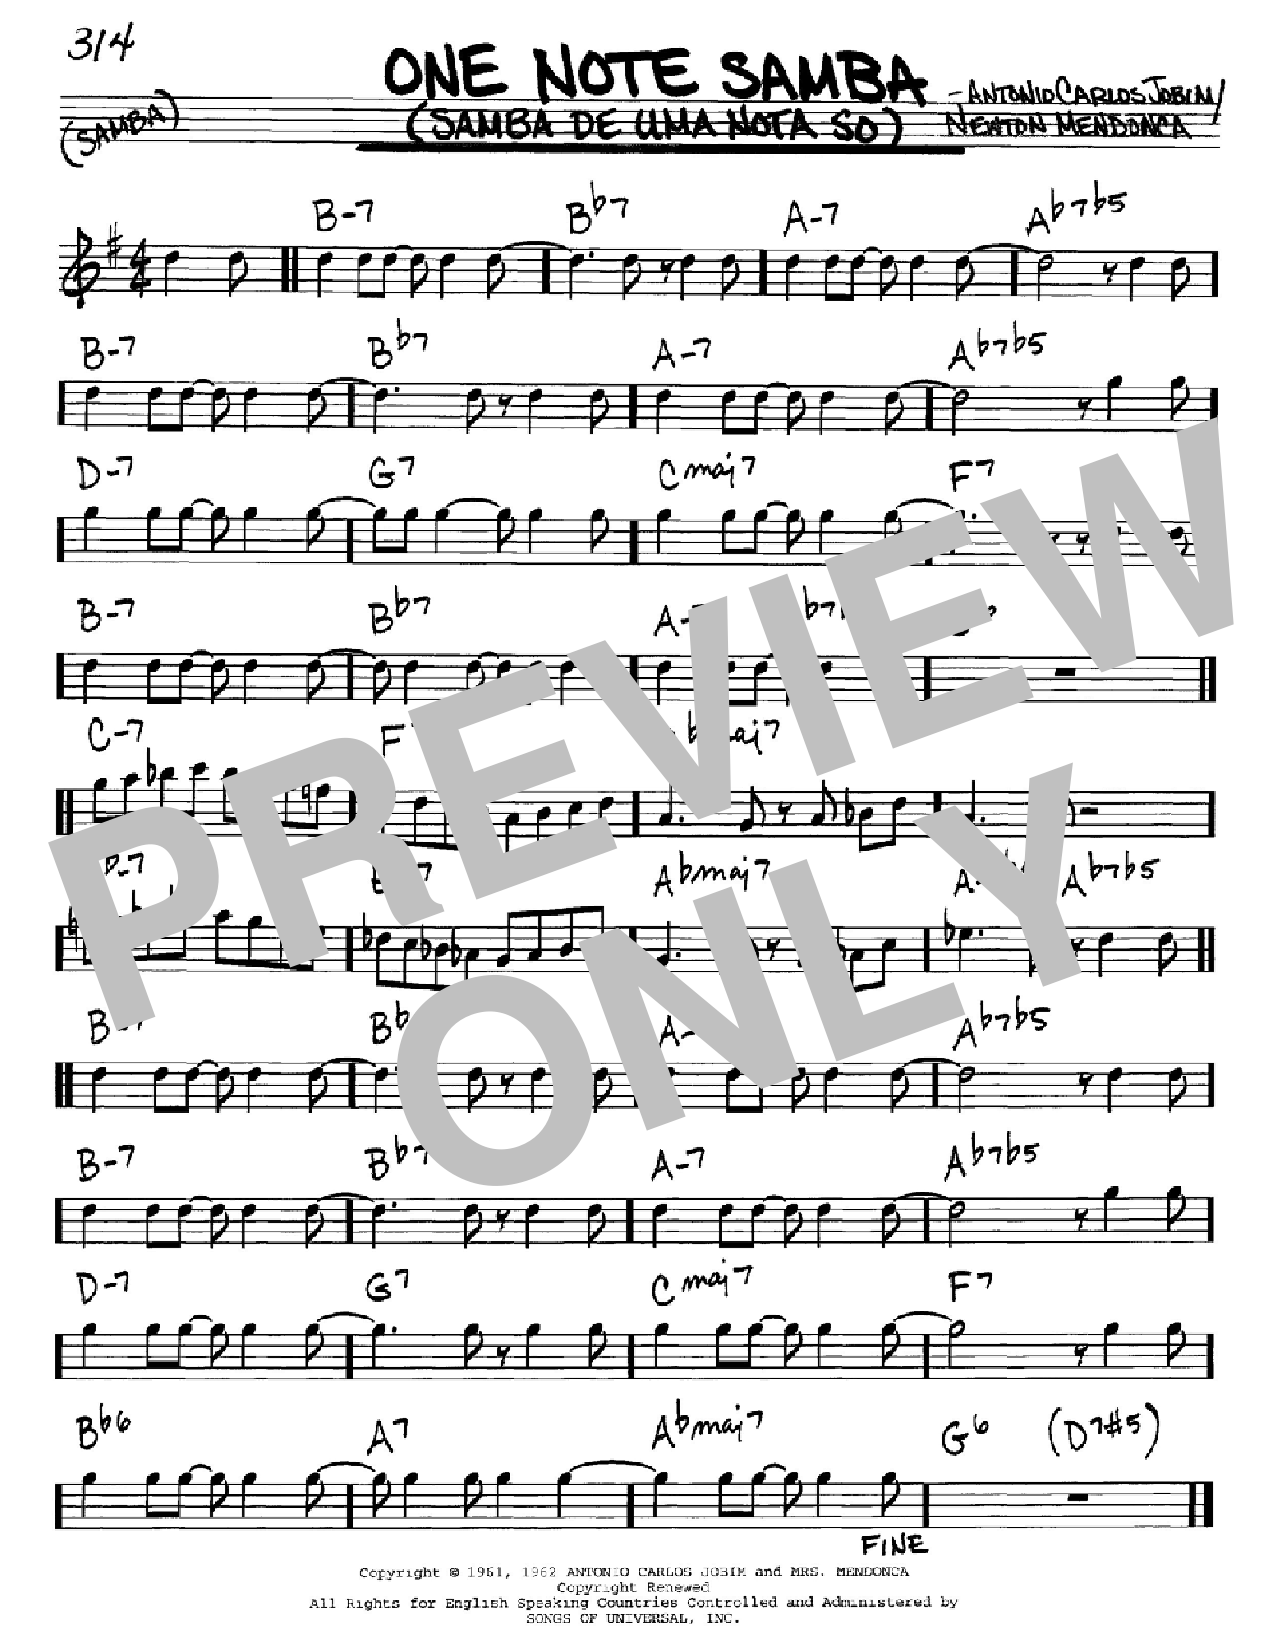 Download Antonio Carlos Jobim One Note Samba (Samba De Uma Nota So) Sheet Music